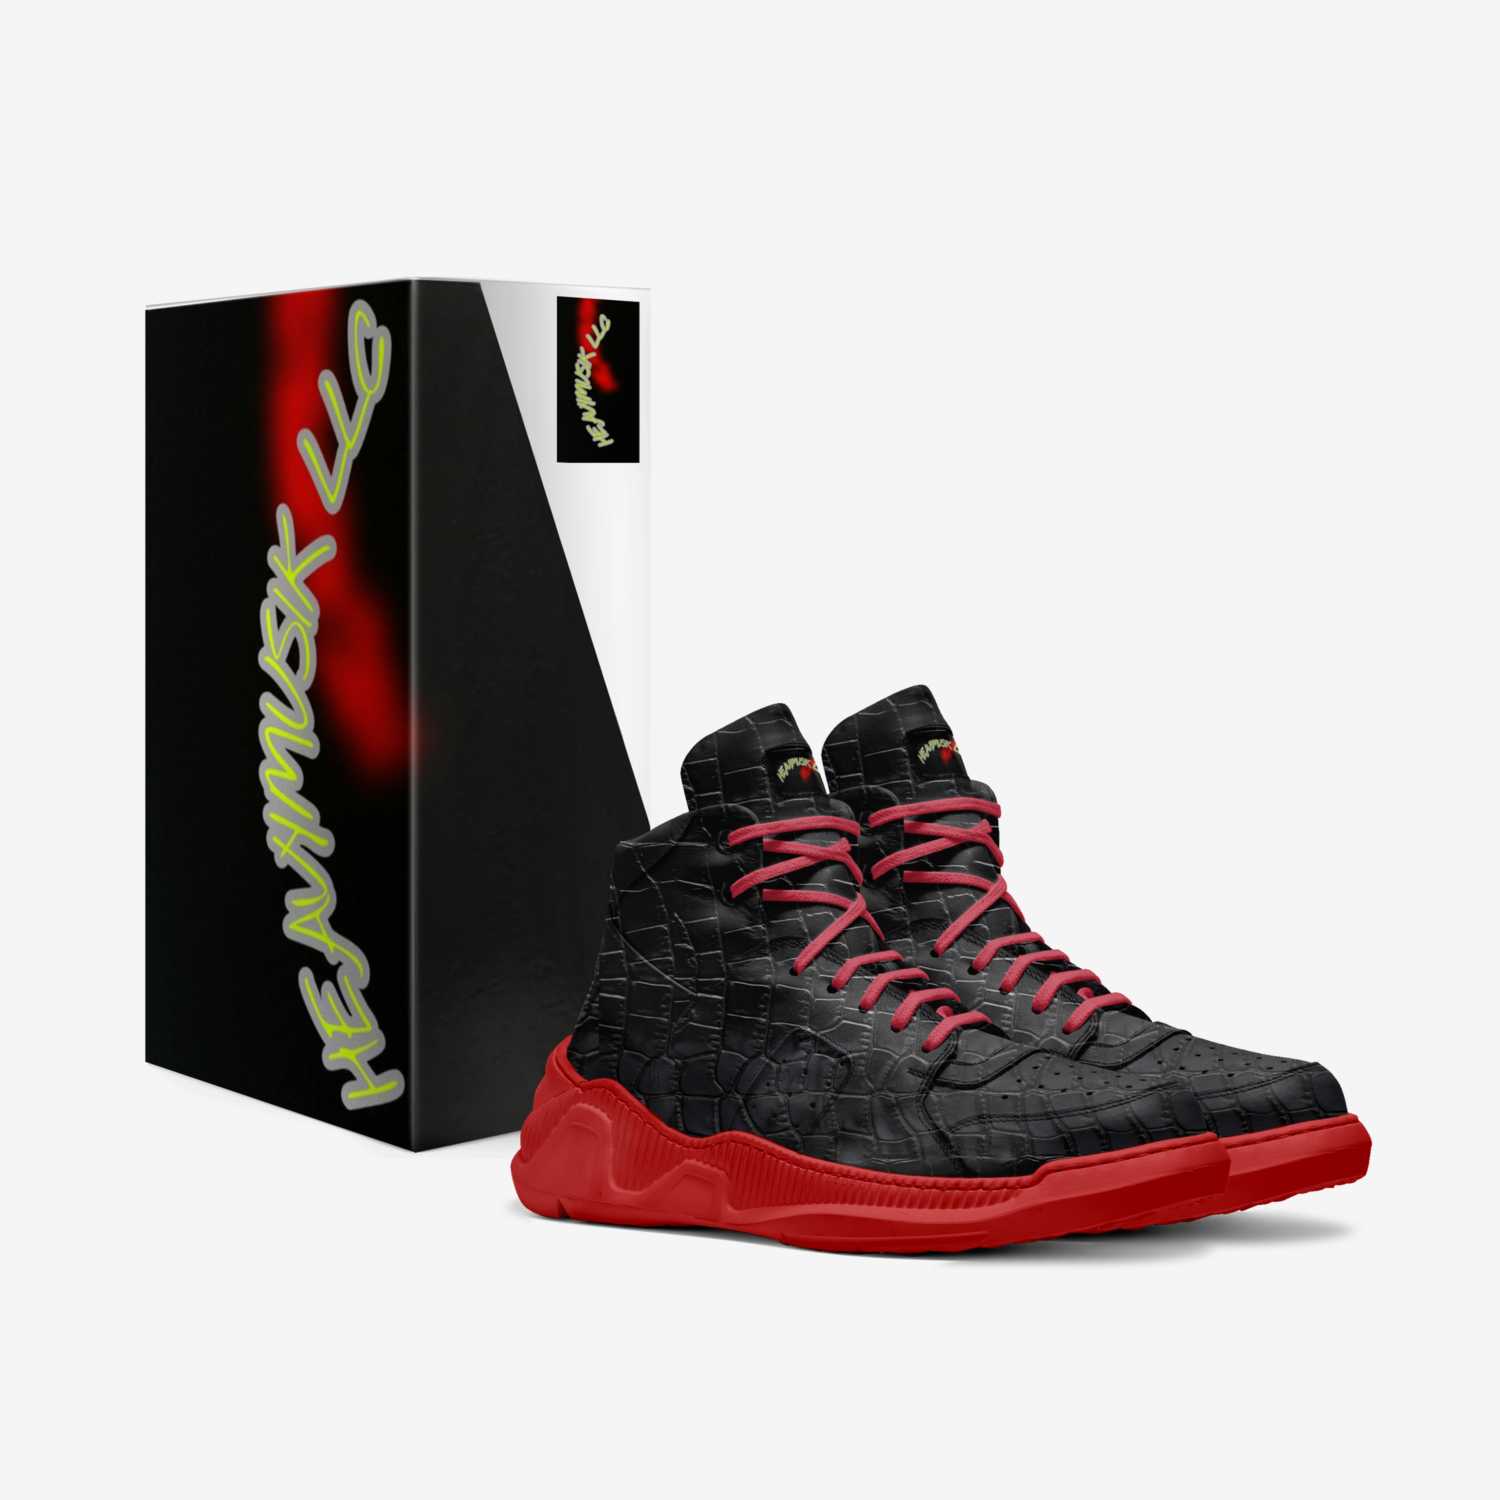 HEAVYMUSIK LLC custom made in Italy shoes by Brandon Karrington | Box view